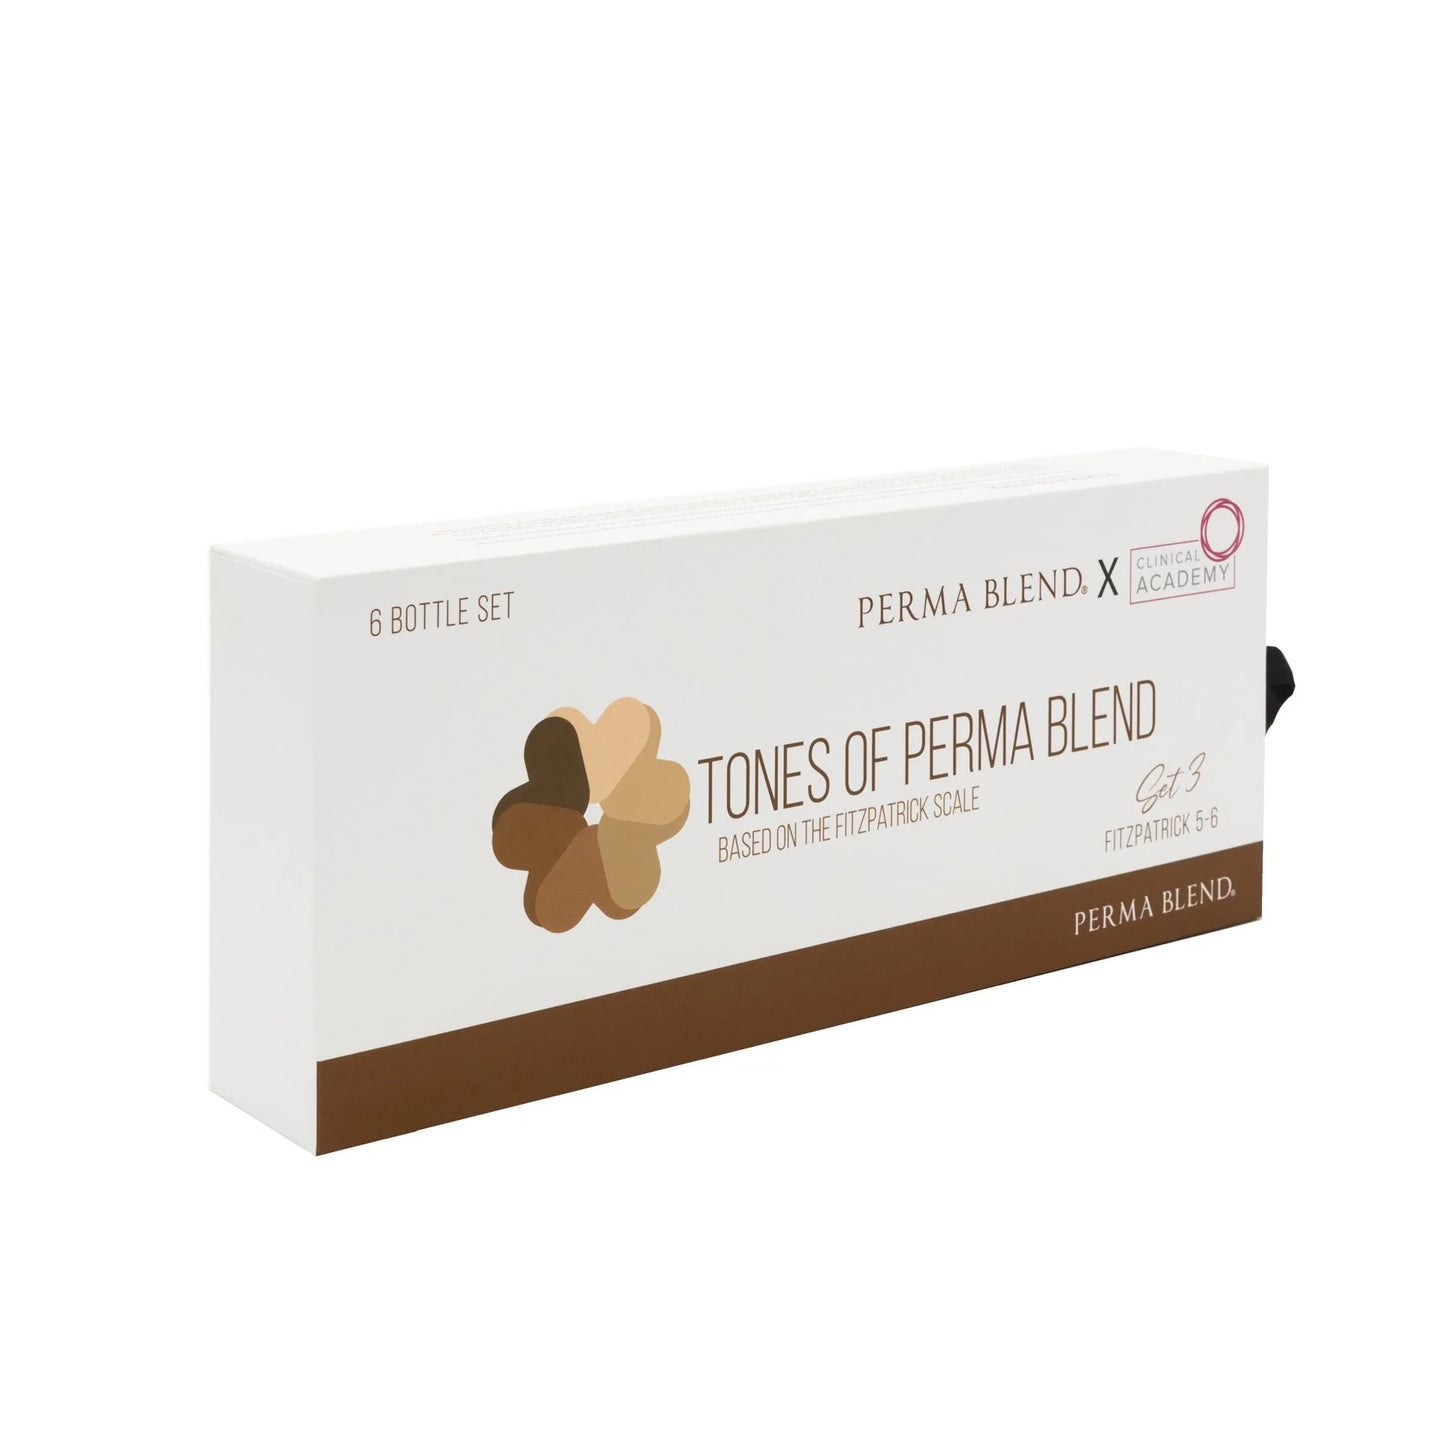 Tones of Perma Blend Fitzpatrick 5-6 Set — Perma Blend — 6 1/2oz Bottles